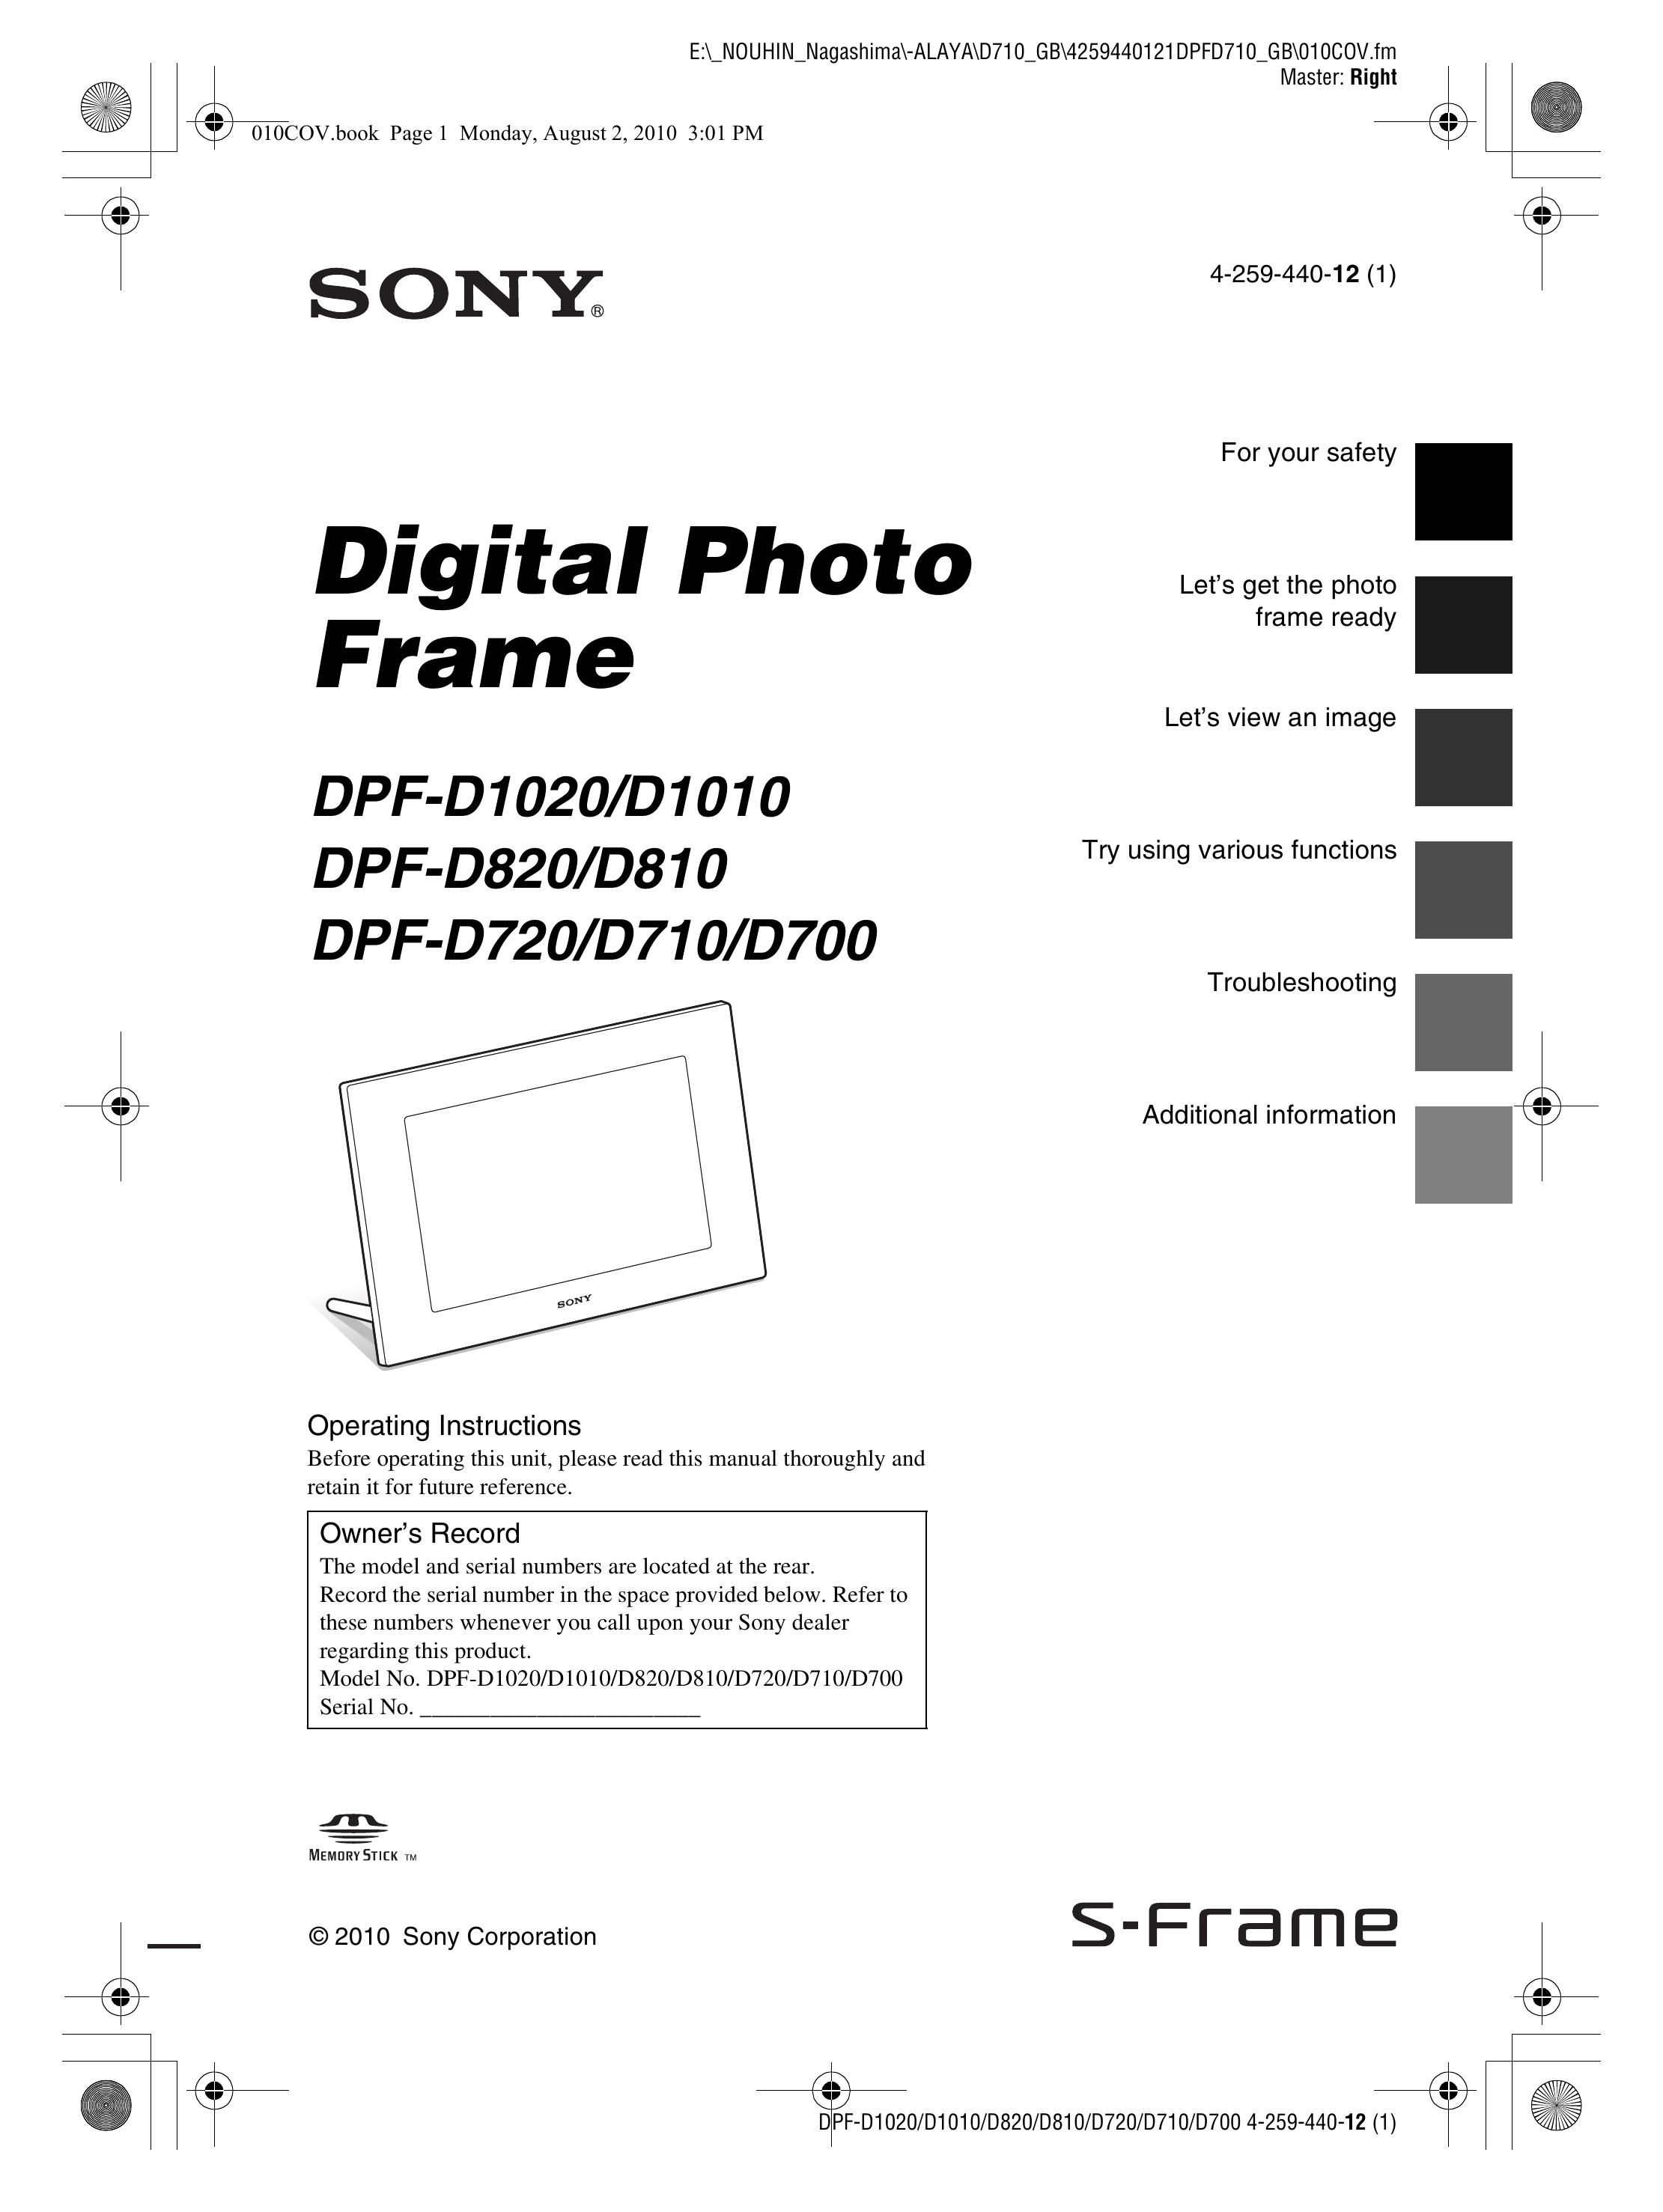 Sony D810 DPF-D720 Digital Photo Frame User Manual